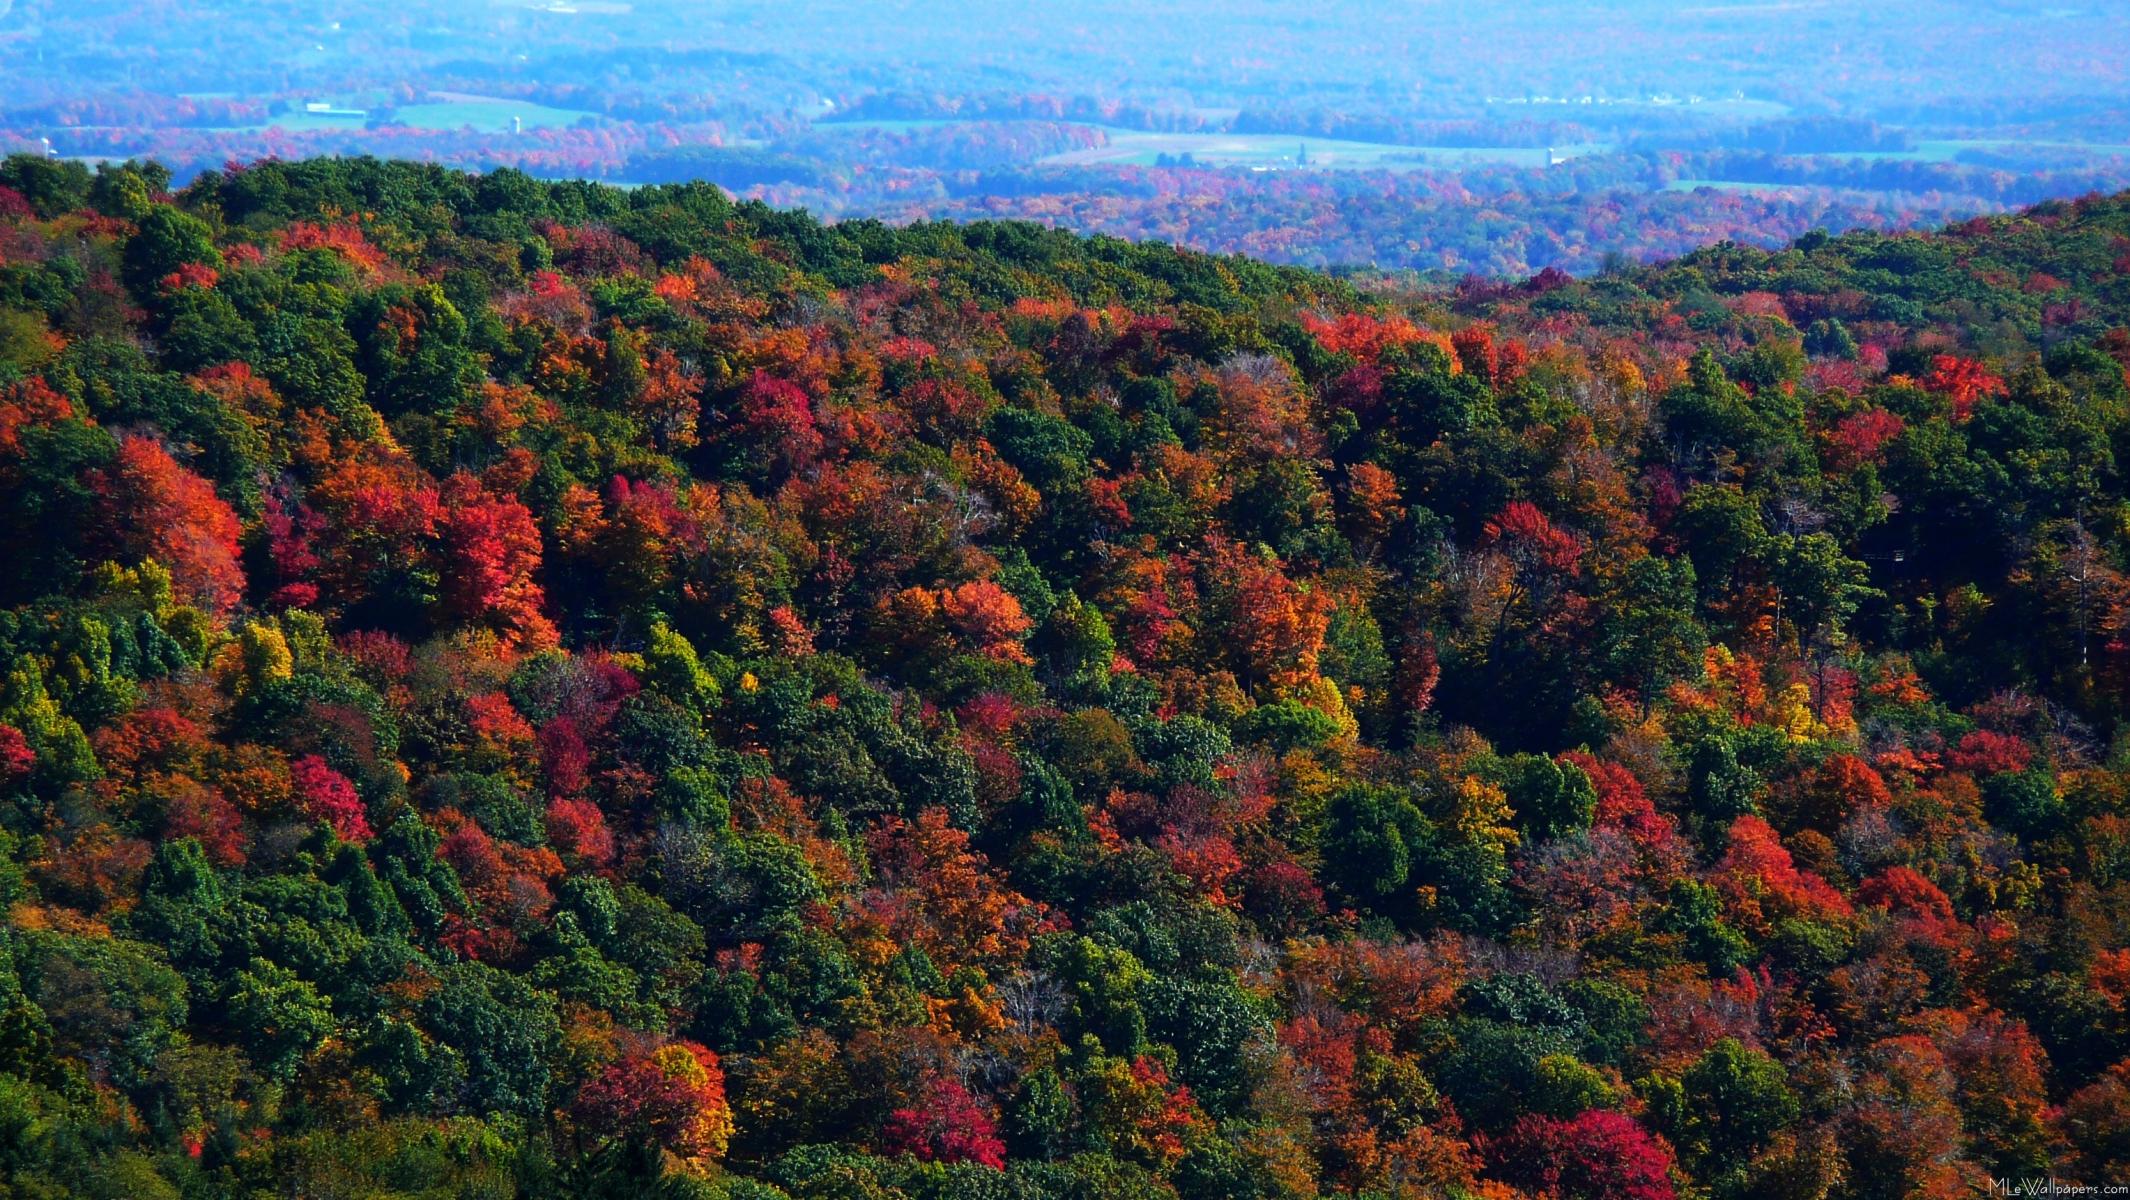 MLeWallpaperscom   Appalachian Mountains in Fall 2130x1200